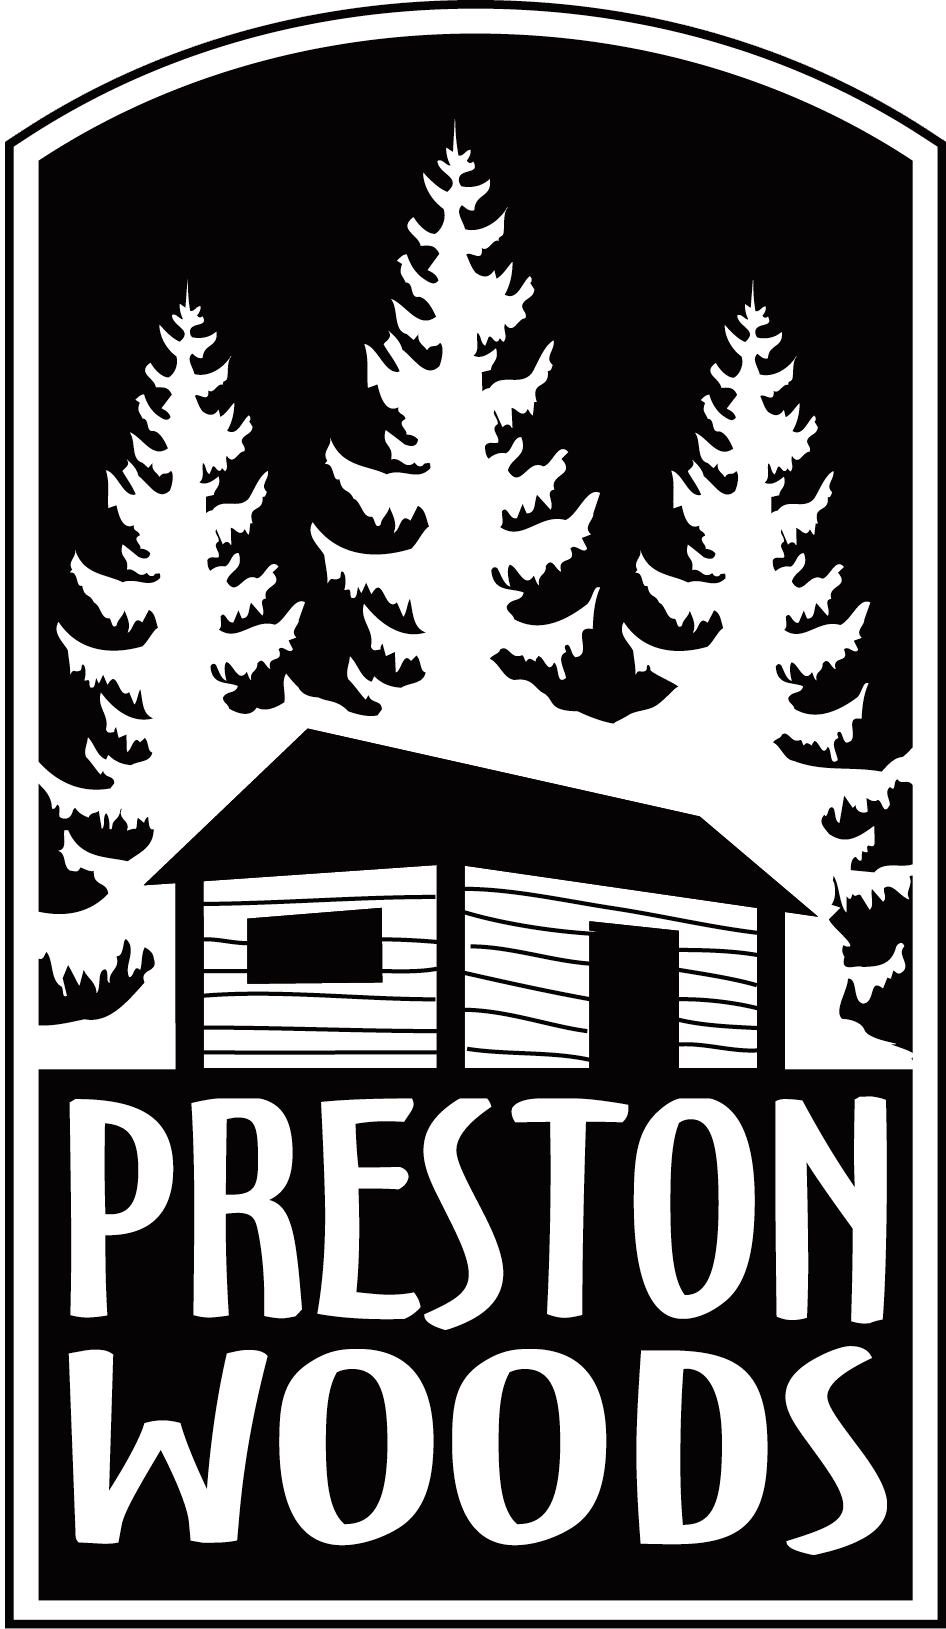 Preston Woods Publishing Company